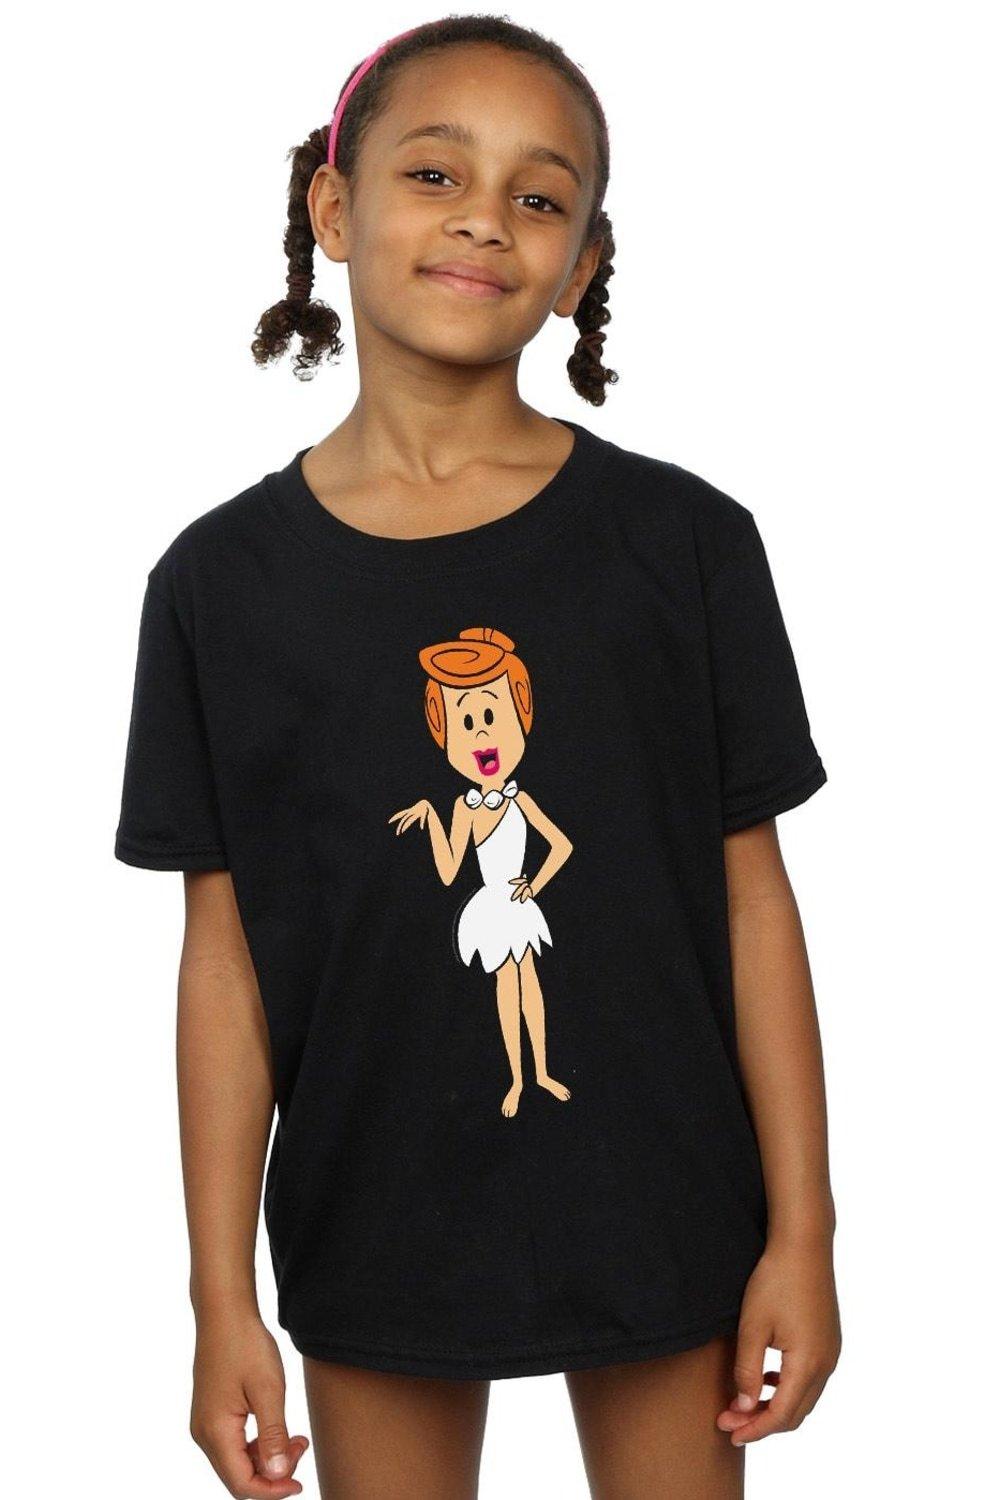 Wilma Flintstone Classic Pose Cotton T-Shirt